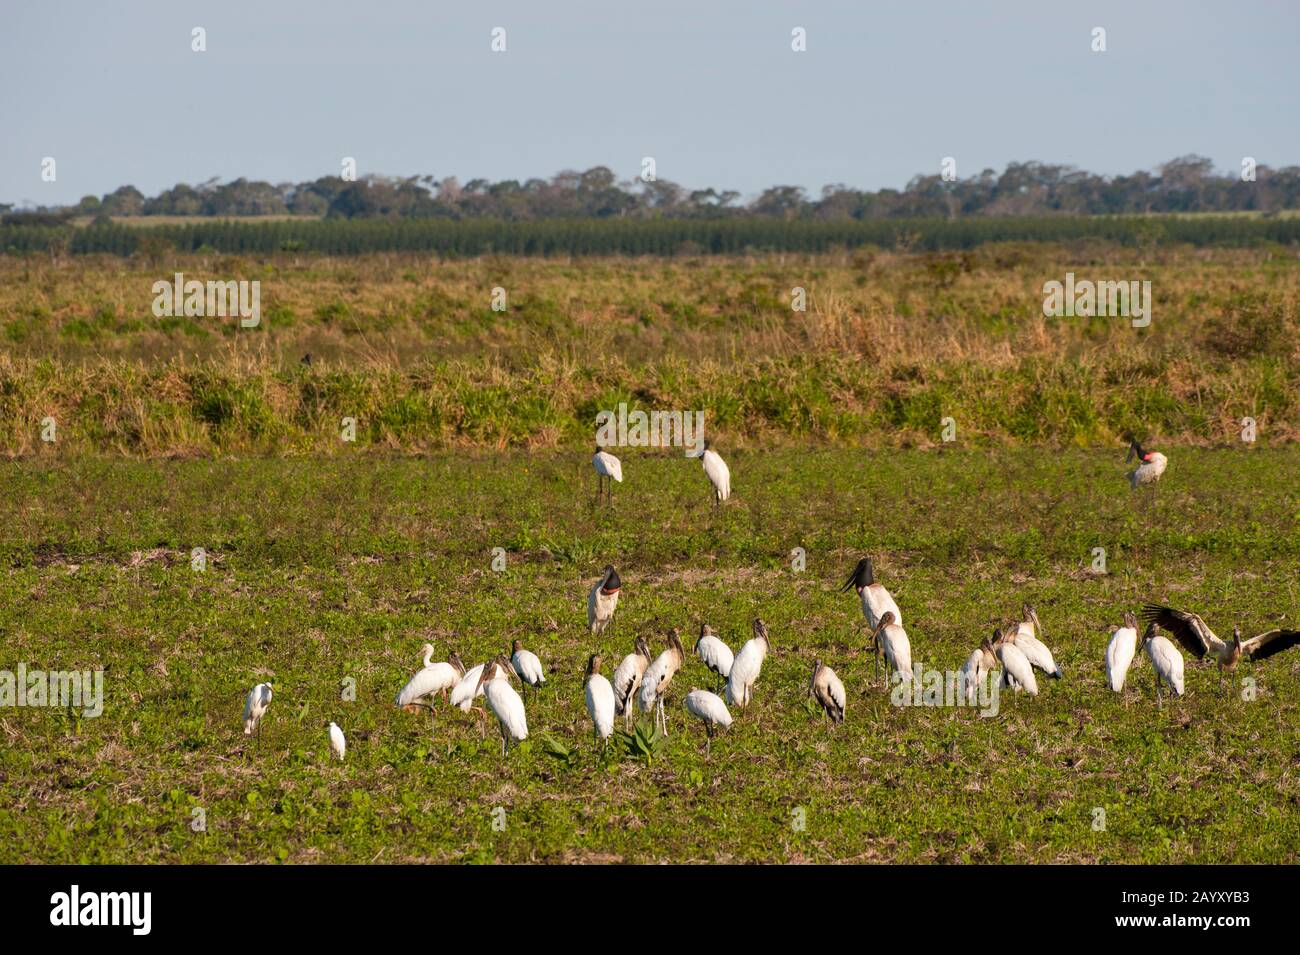 A group of Jabiru storks (Jabiru mycteria) and Wood storks (Mycteria americana) on a field at San Francisco Ranch in the Pantanal in Brazil. Stock Photo